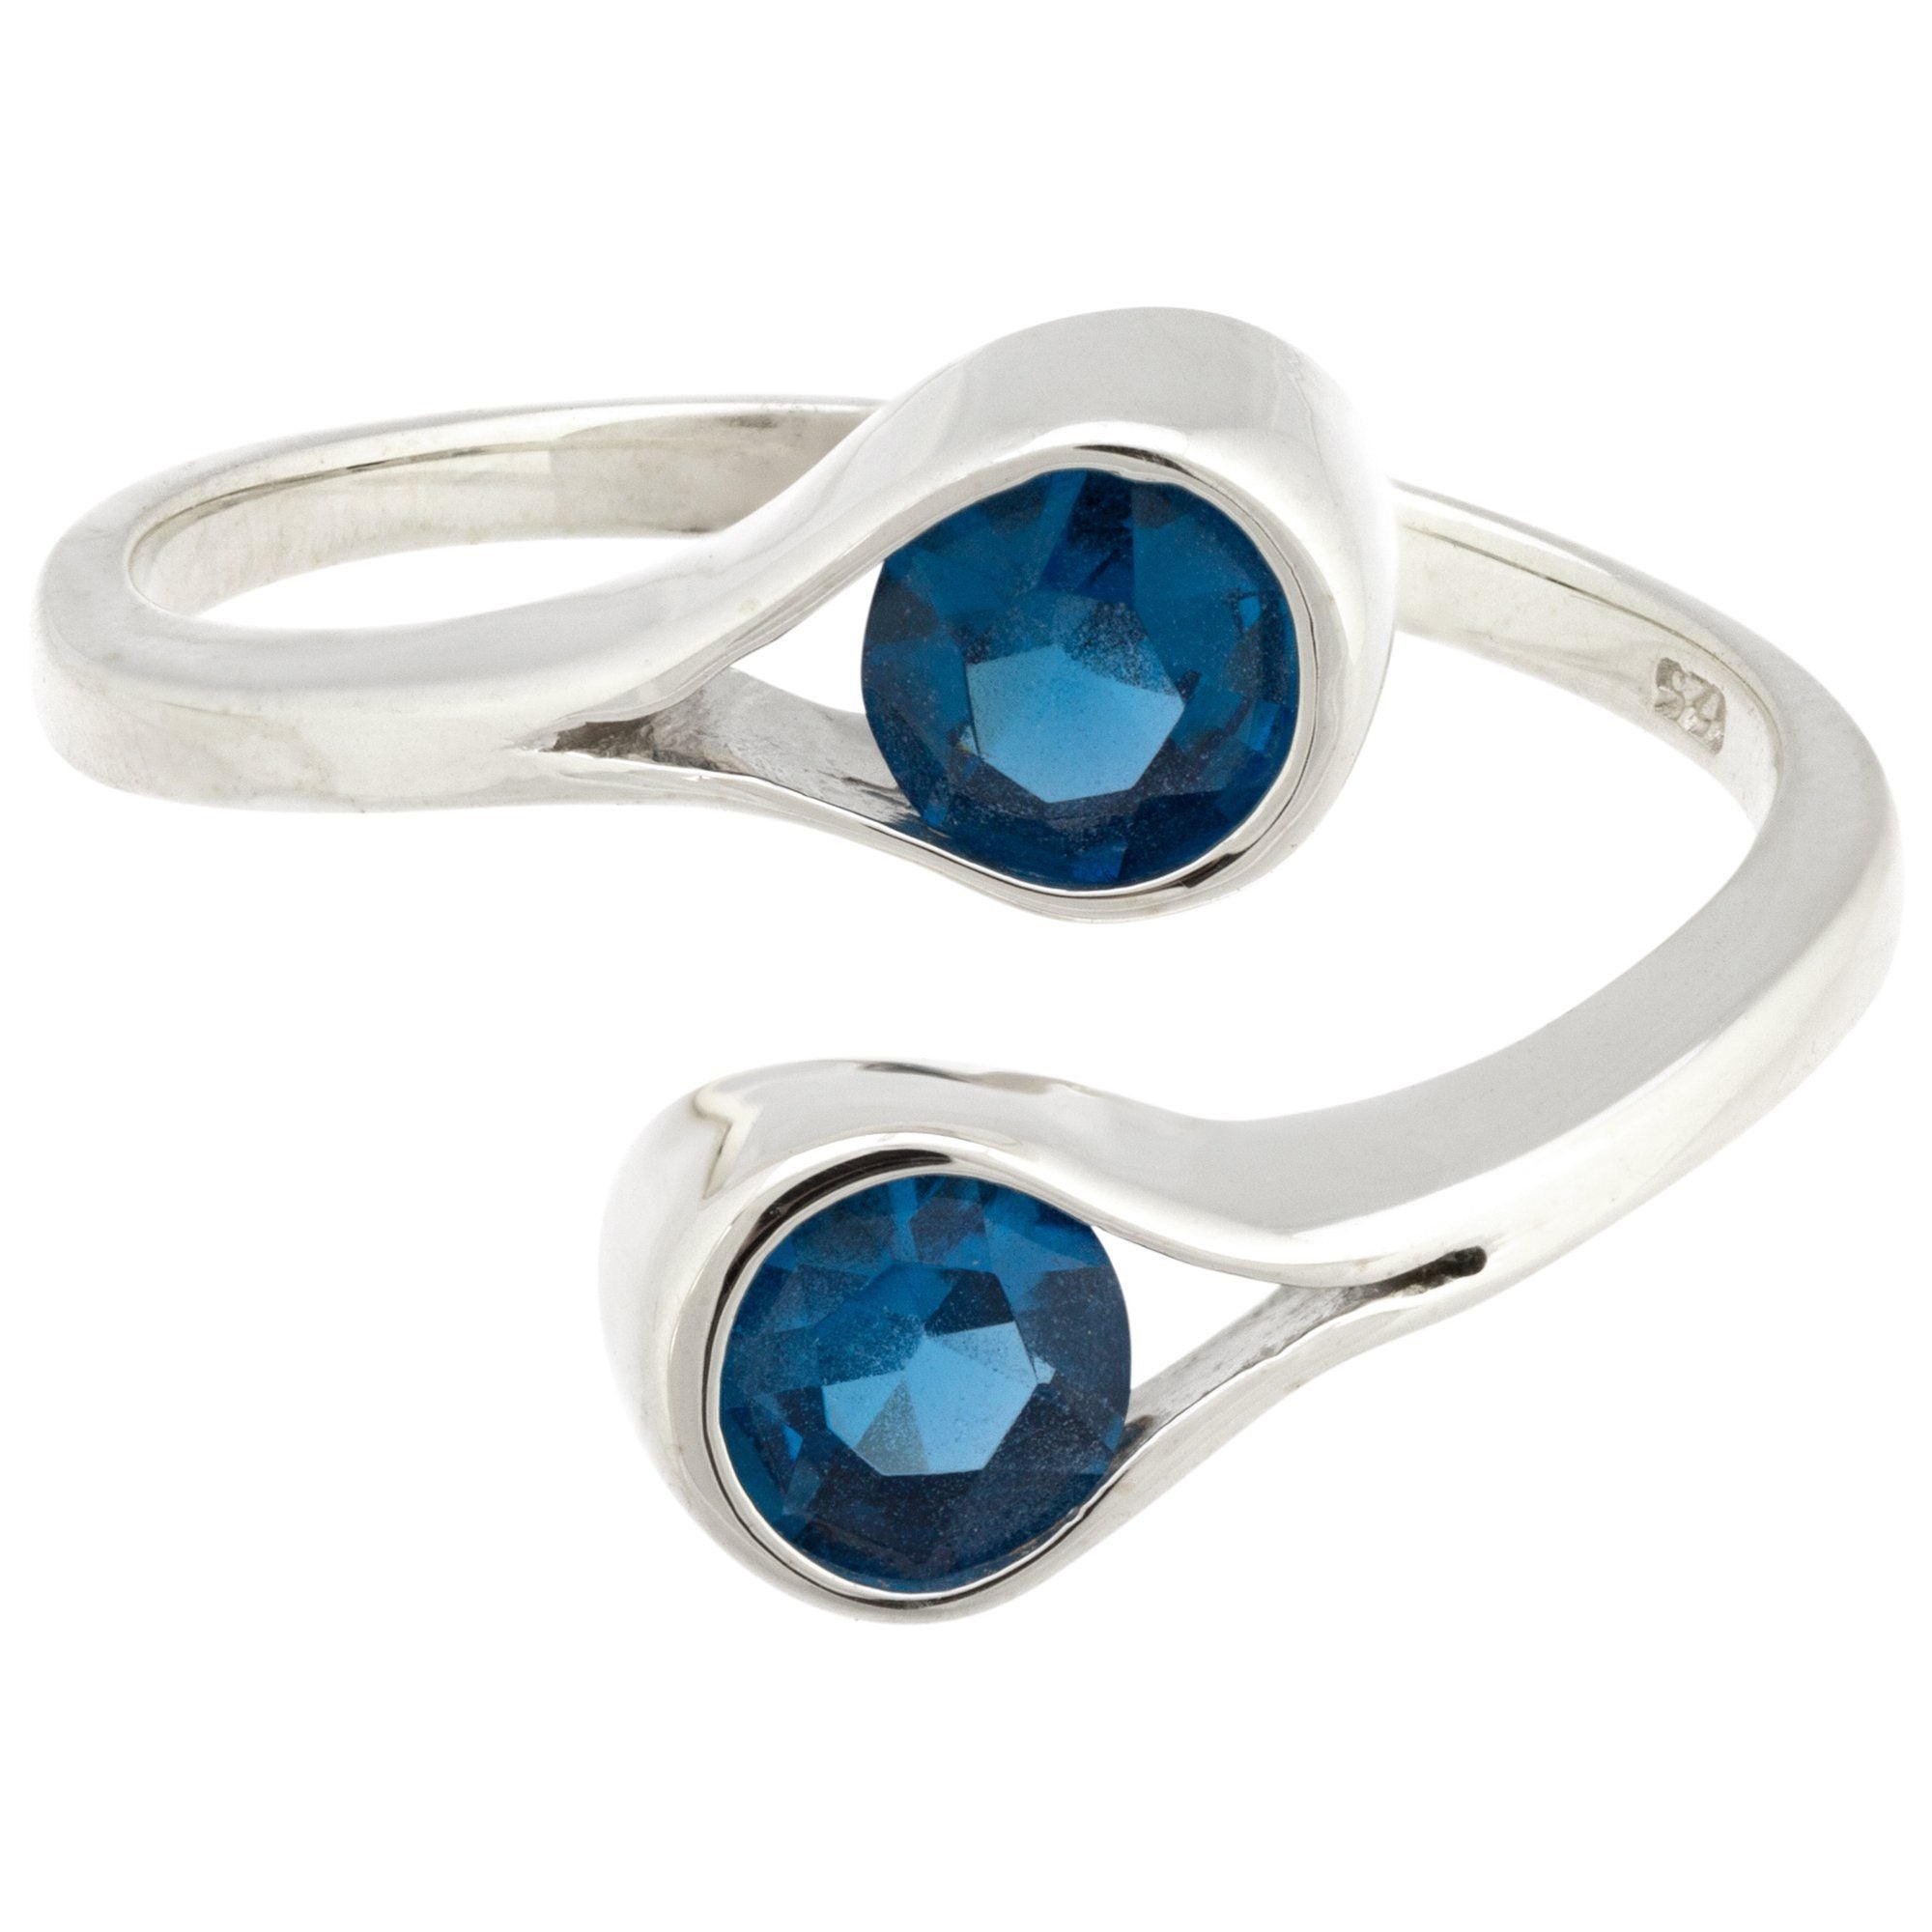 Double Drop Sterling & Gemstone Wrap Ring - Blue Topaz - 8